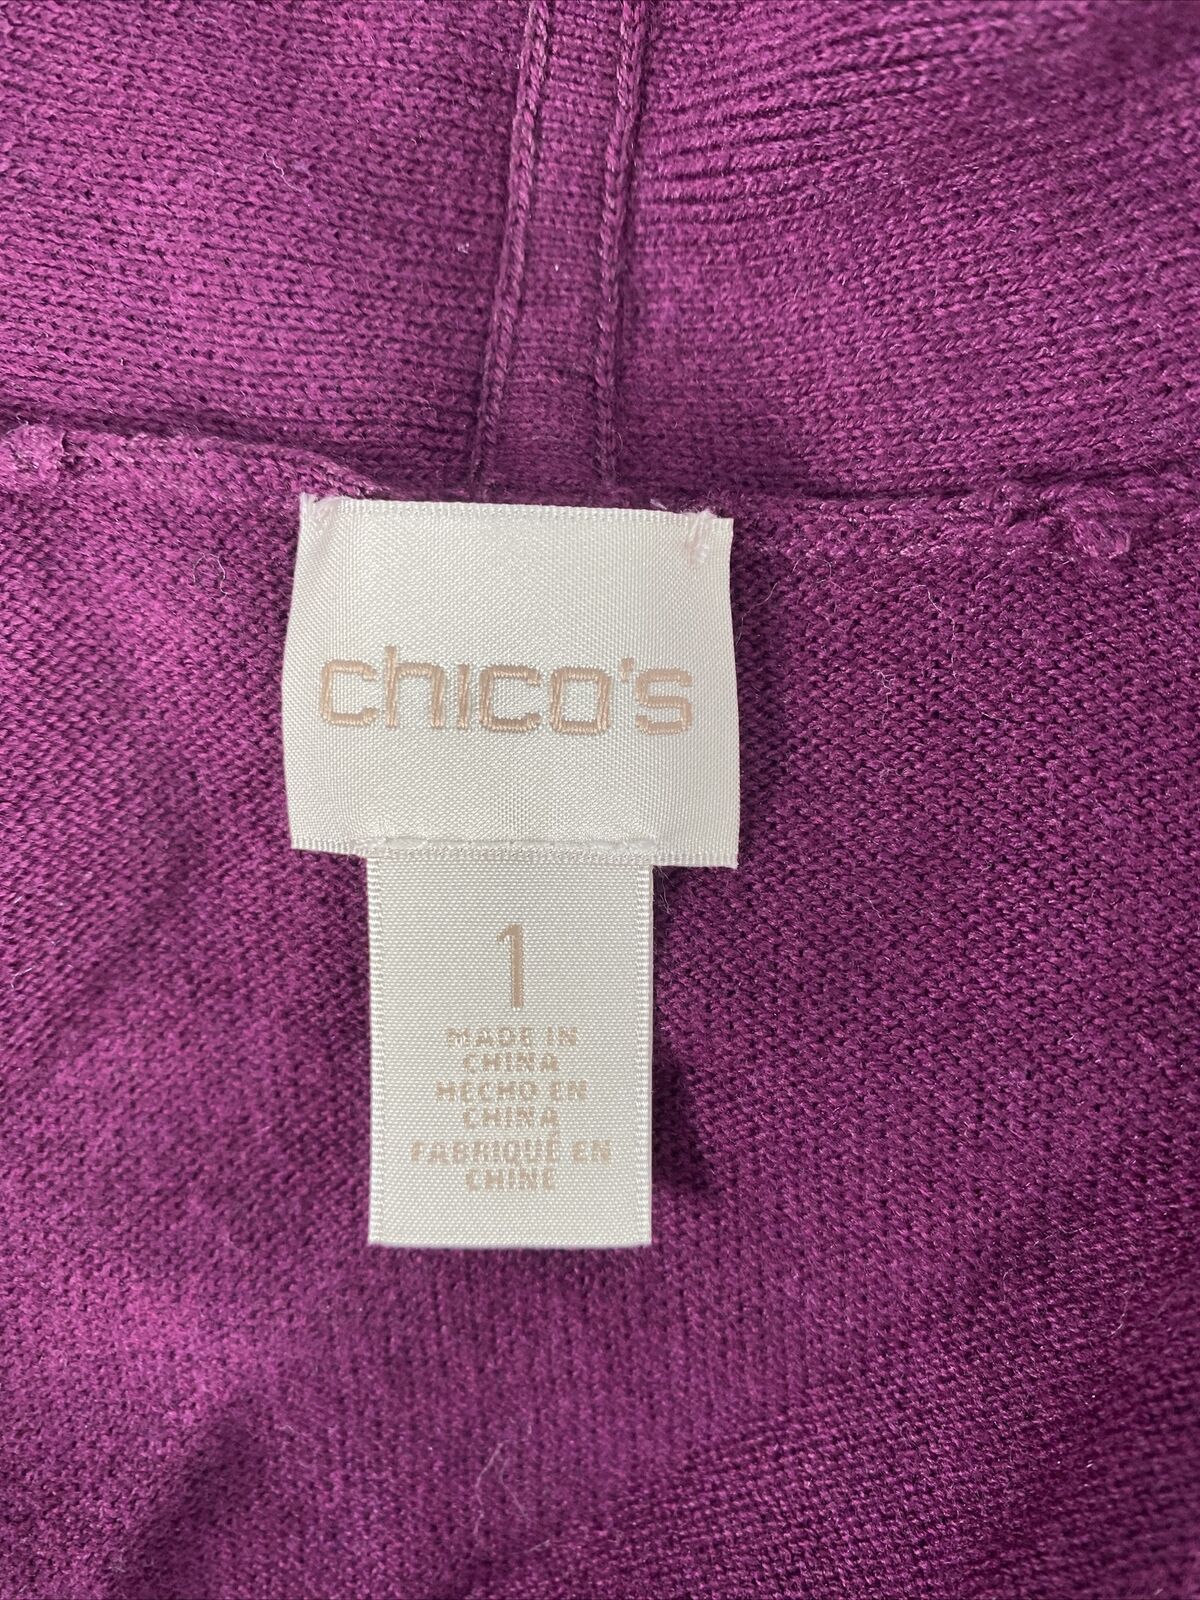 Chico's Women's Purple Long Sleeve Knit Cardigan Sweater - 1 (US M)